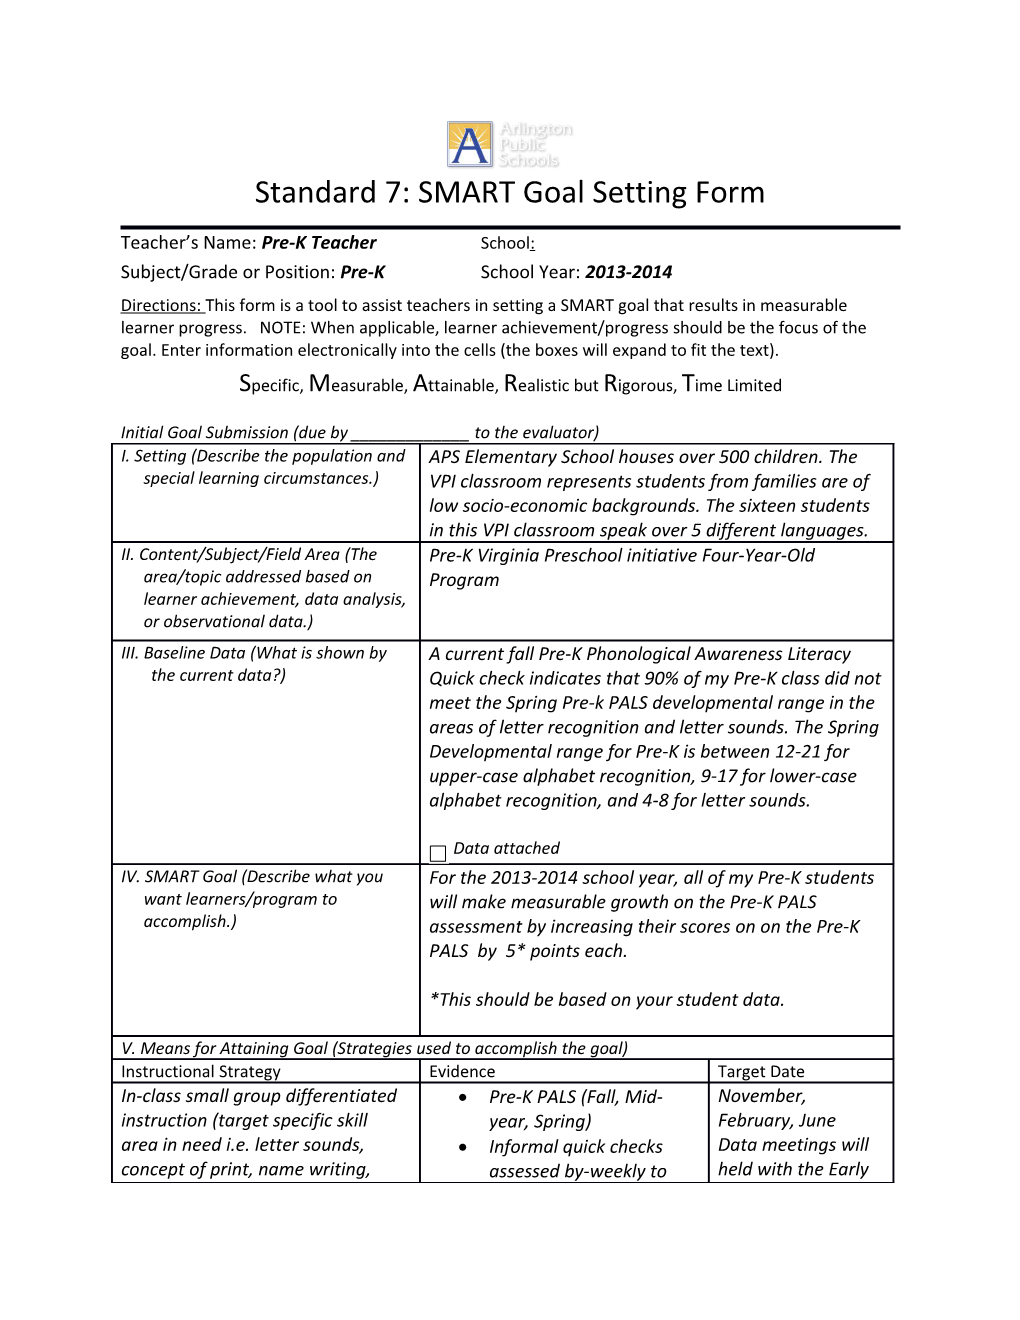 Standard 7: SMART Goal Setting Form s1